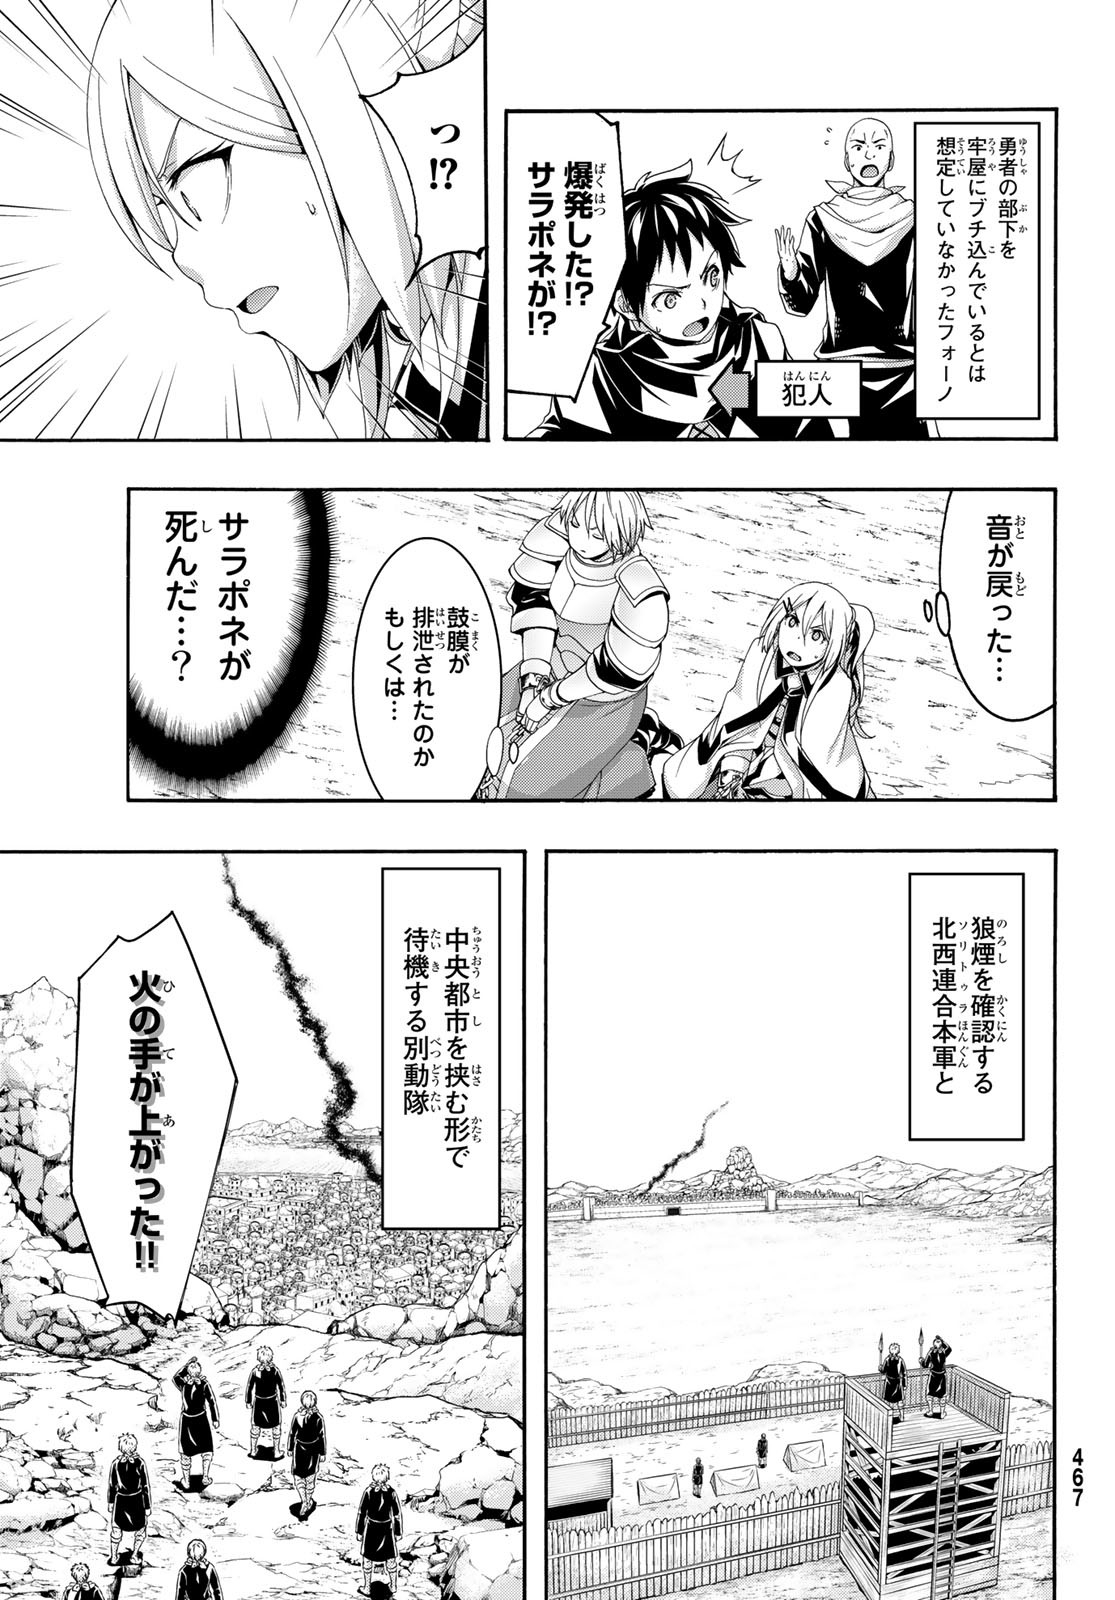 Read 100 Man No Inochi No Ue Ni Ore Wa Tatte Iru Chapter 81 - MangaFreak